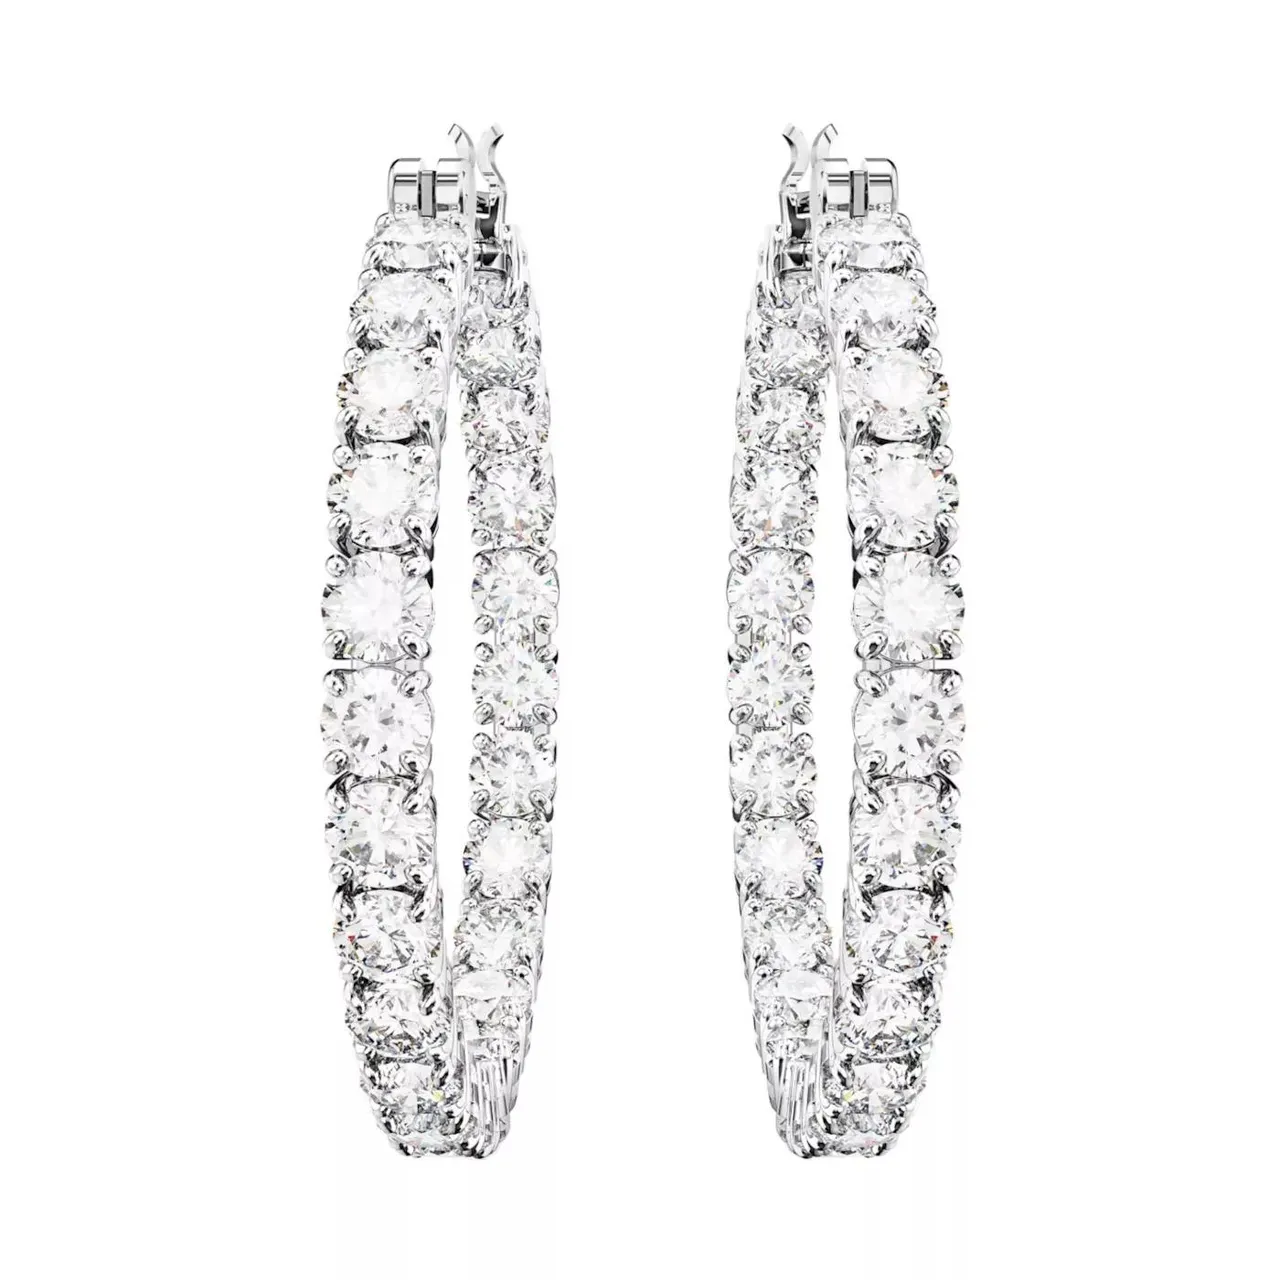 Swarovski Earrings - Swarovski Matrix Silberfarbene Ohrringe 5647715 - silver - Earrings for ladies